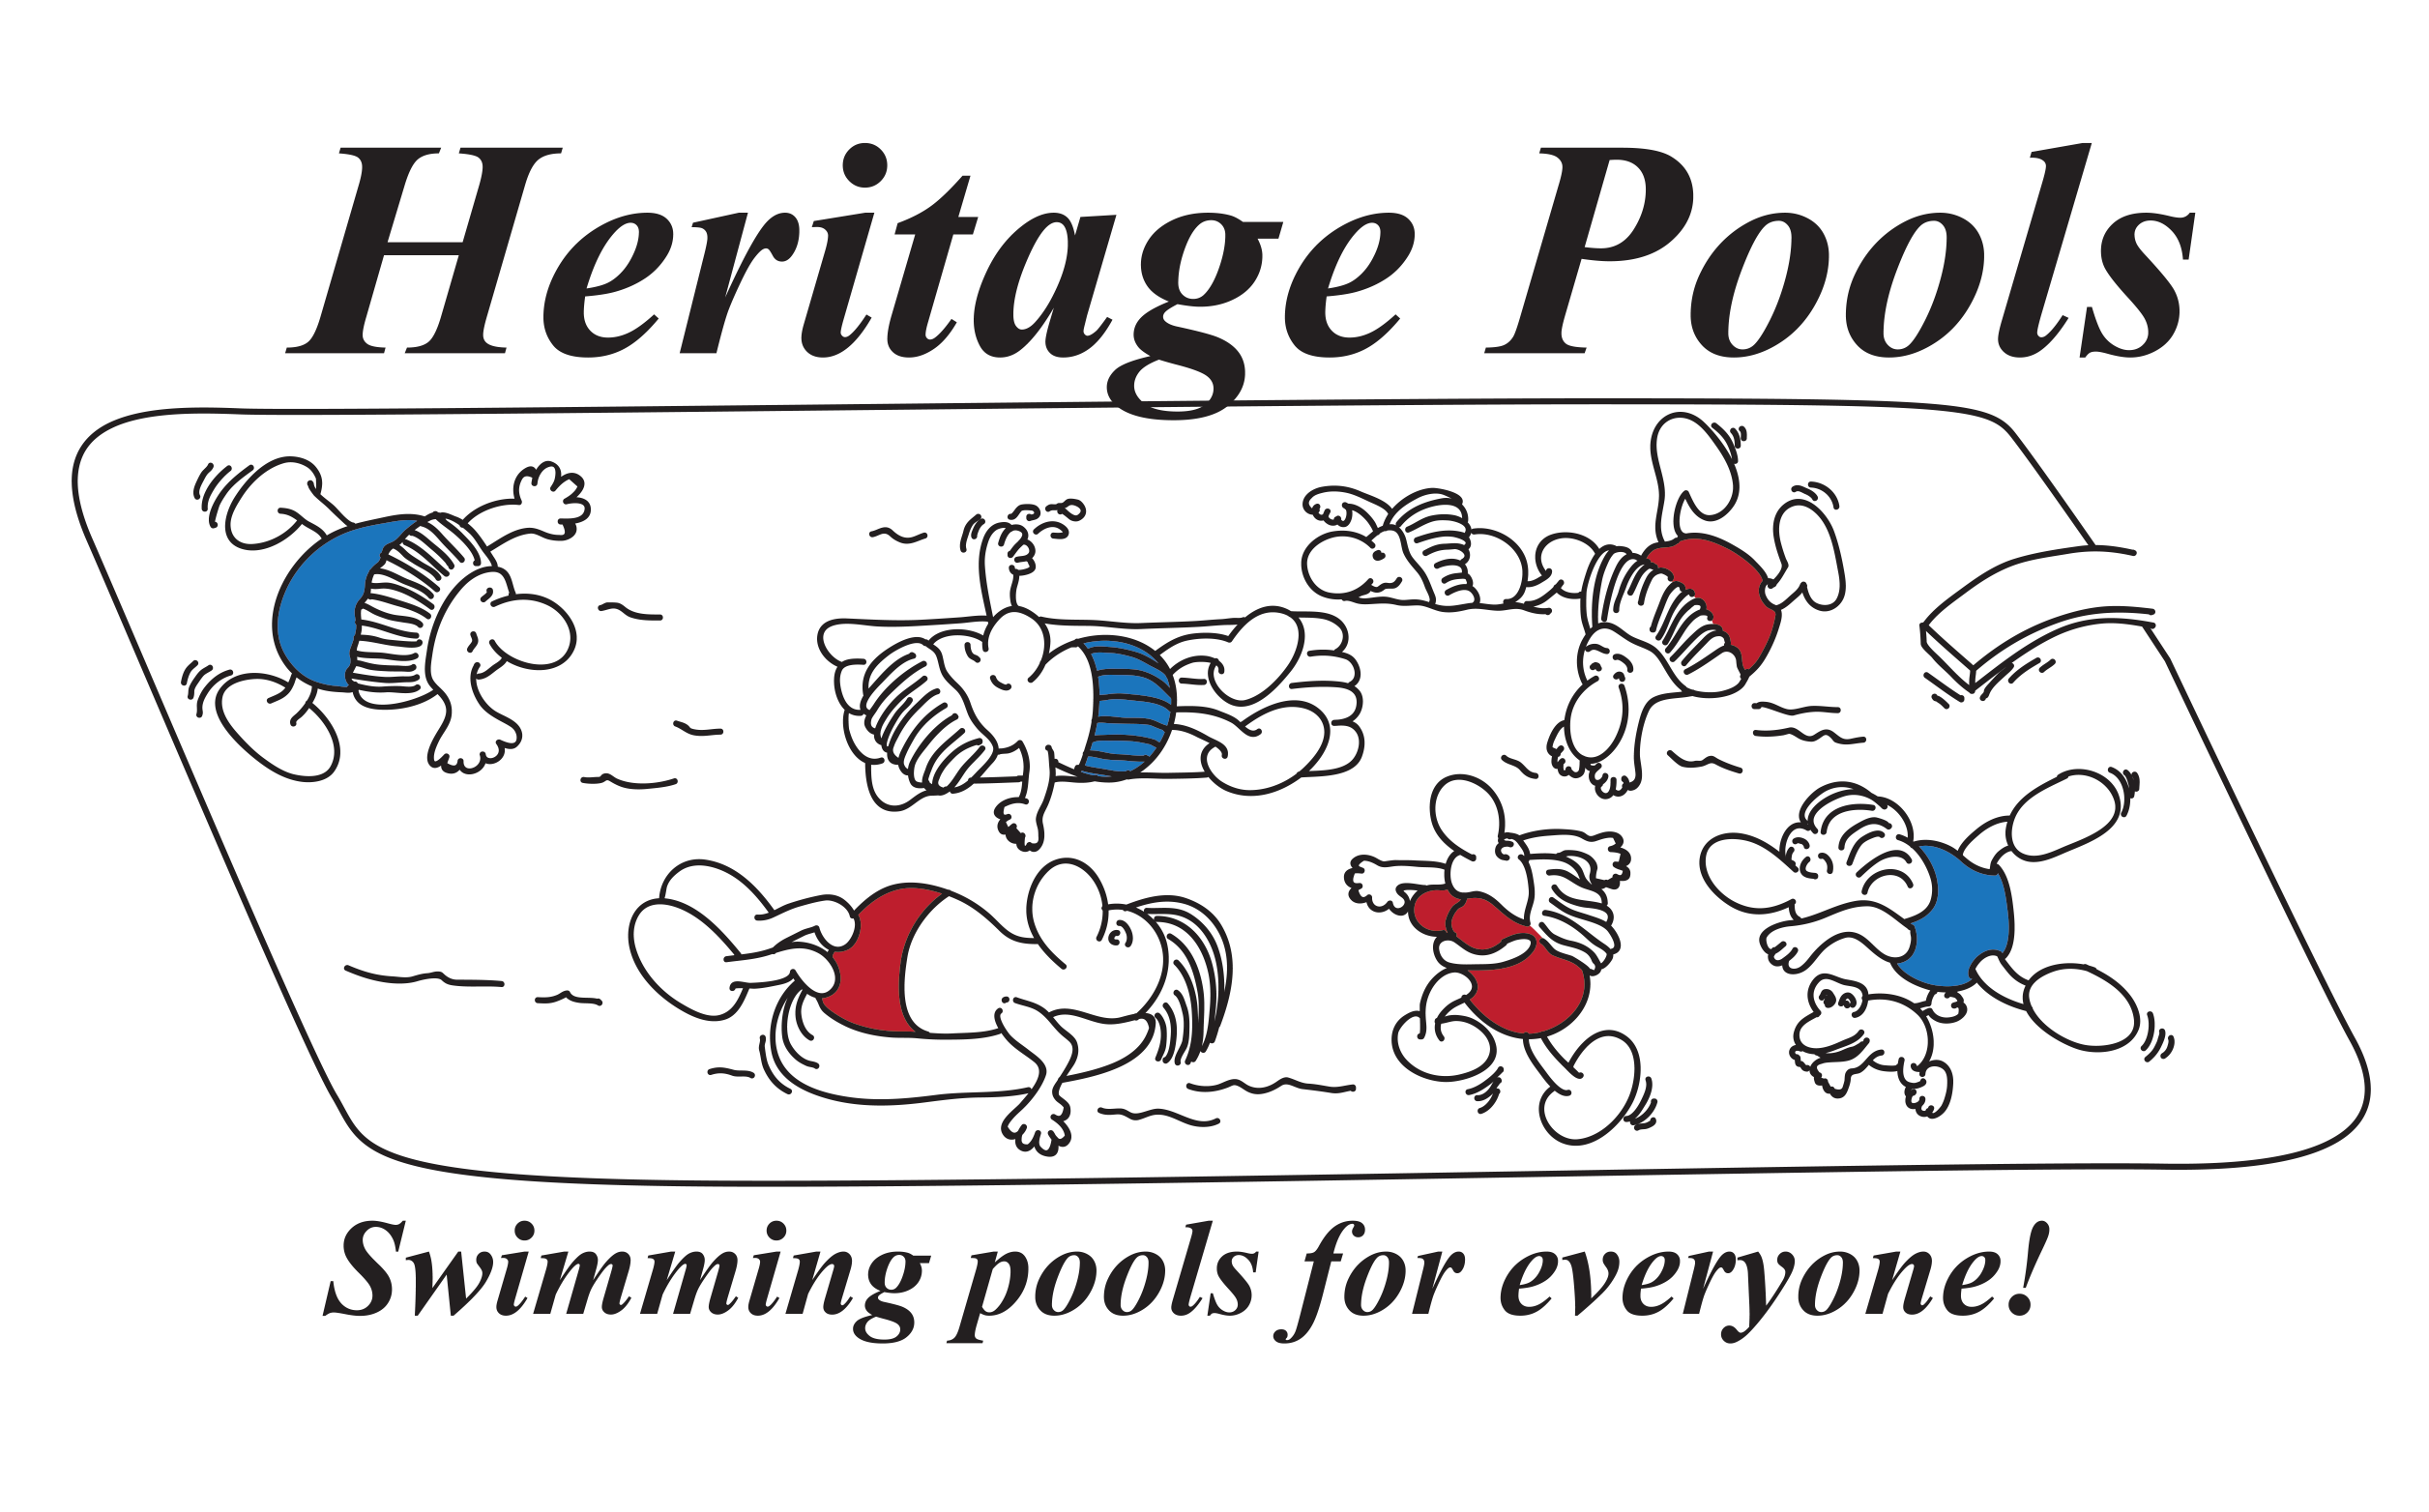 Heritage Pools: Swimming pools for everyone